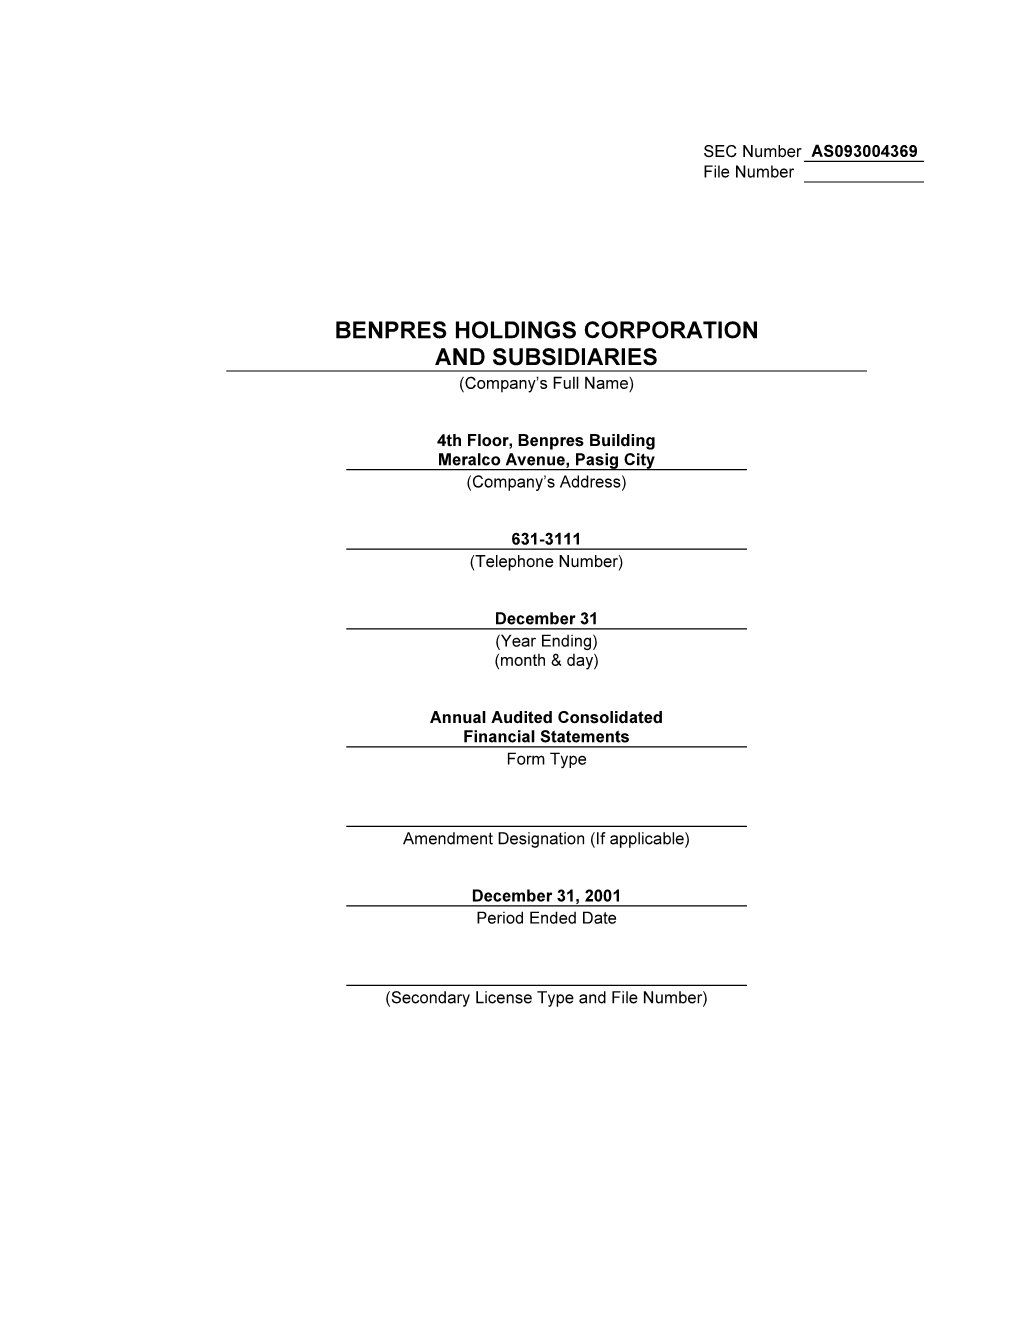 Benpres Holdings and Subsidiaries